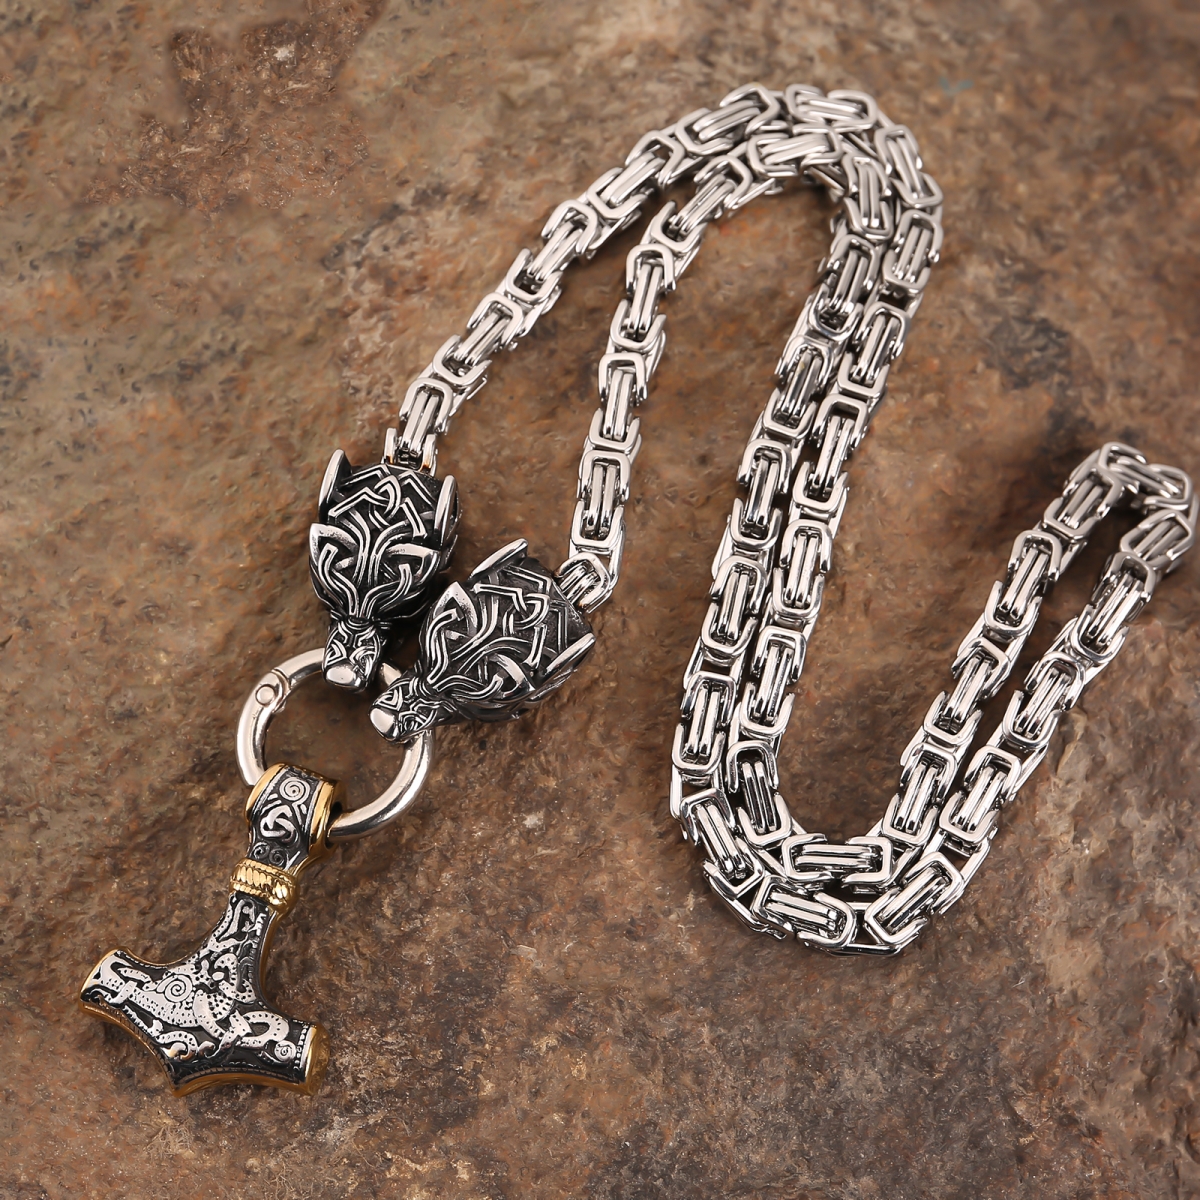 Mjolnir Necklace US$10/PC-NORSECOLLECTION- Viking Jewelry,Viking Necklace,Viking Bracelet,Viking Rings,Viking Mugs,Viking Accessories,Viking Crafts